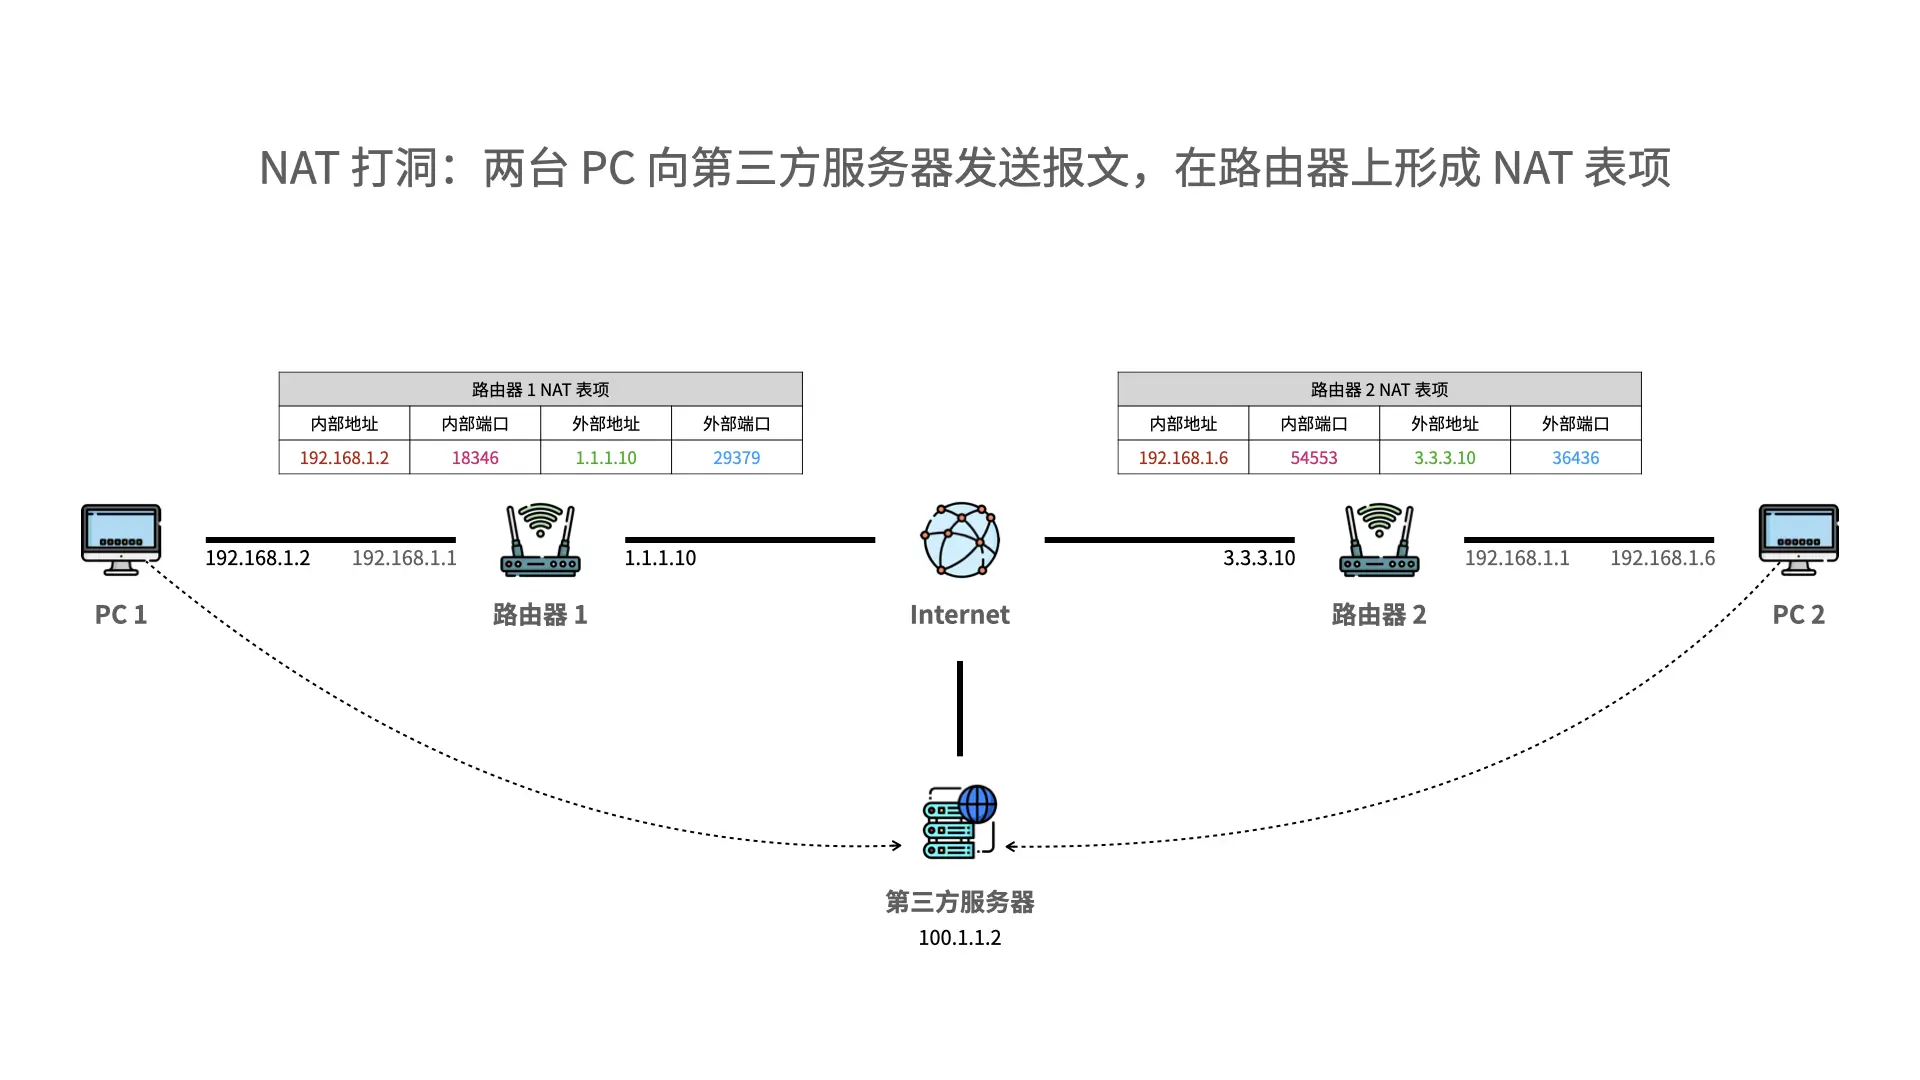 NAT 打洞：两台 PC 向第三方服务器发送报文，在路由器上形成 NAT 表项